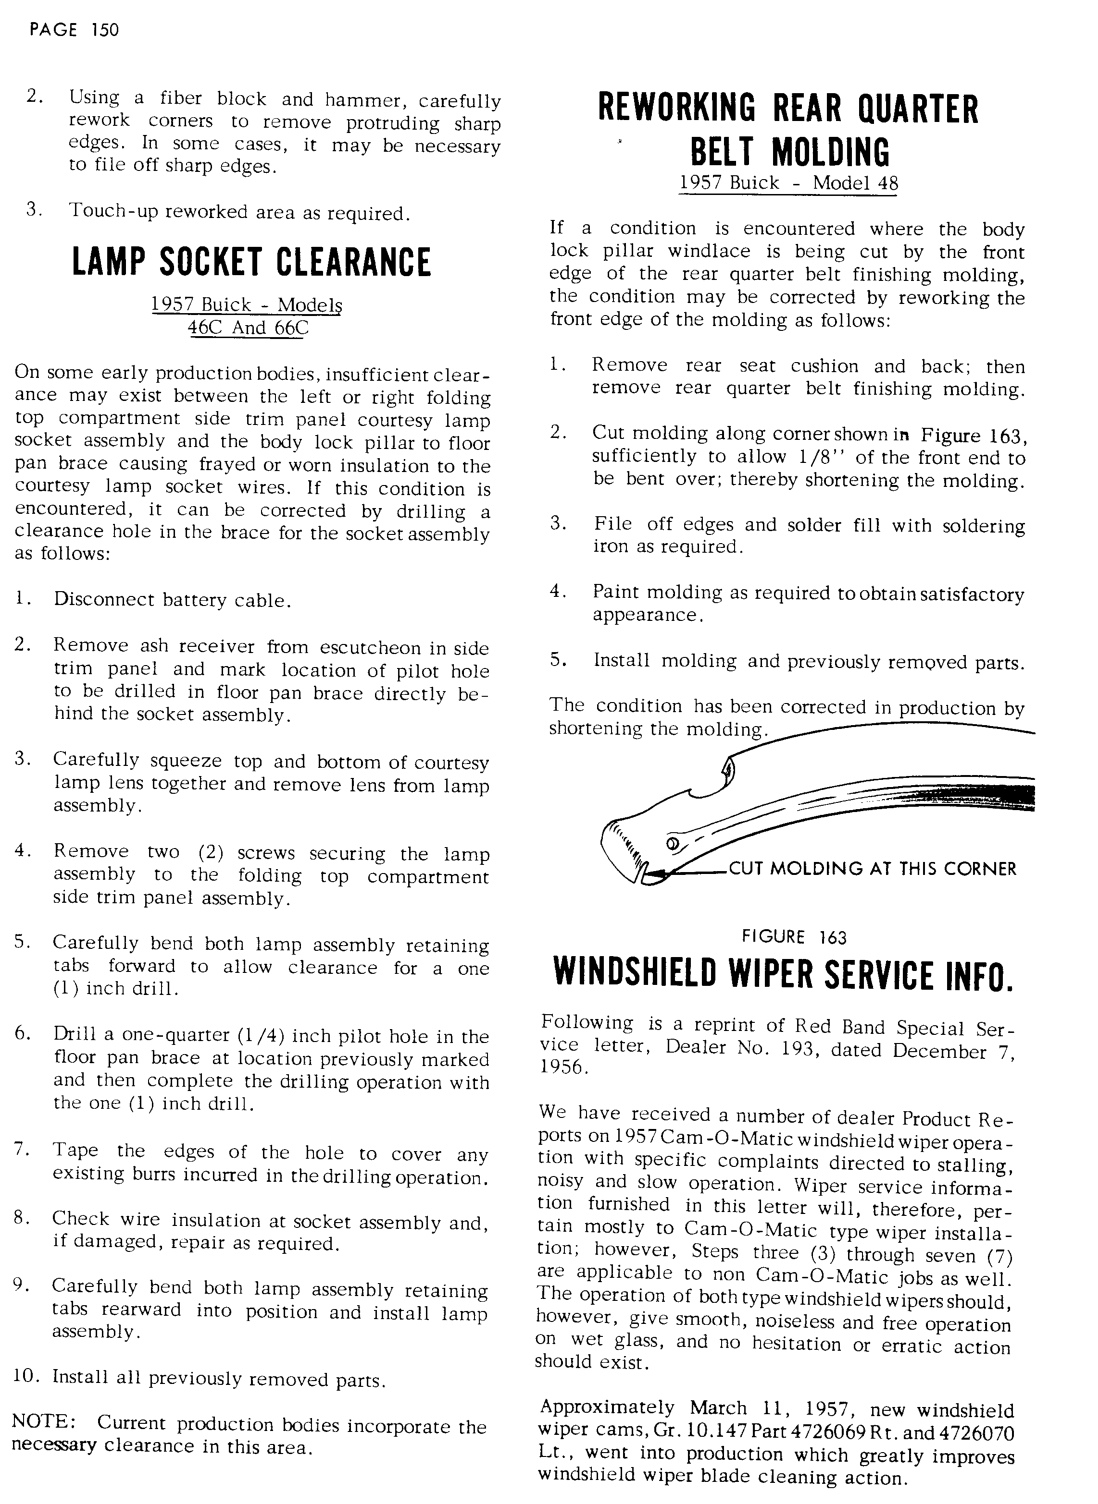 n_1957 Buick Product Service  Bulletins-151-151.jpg